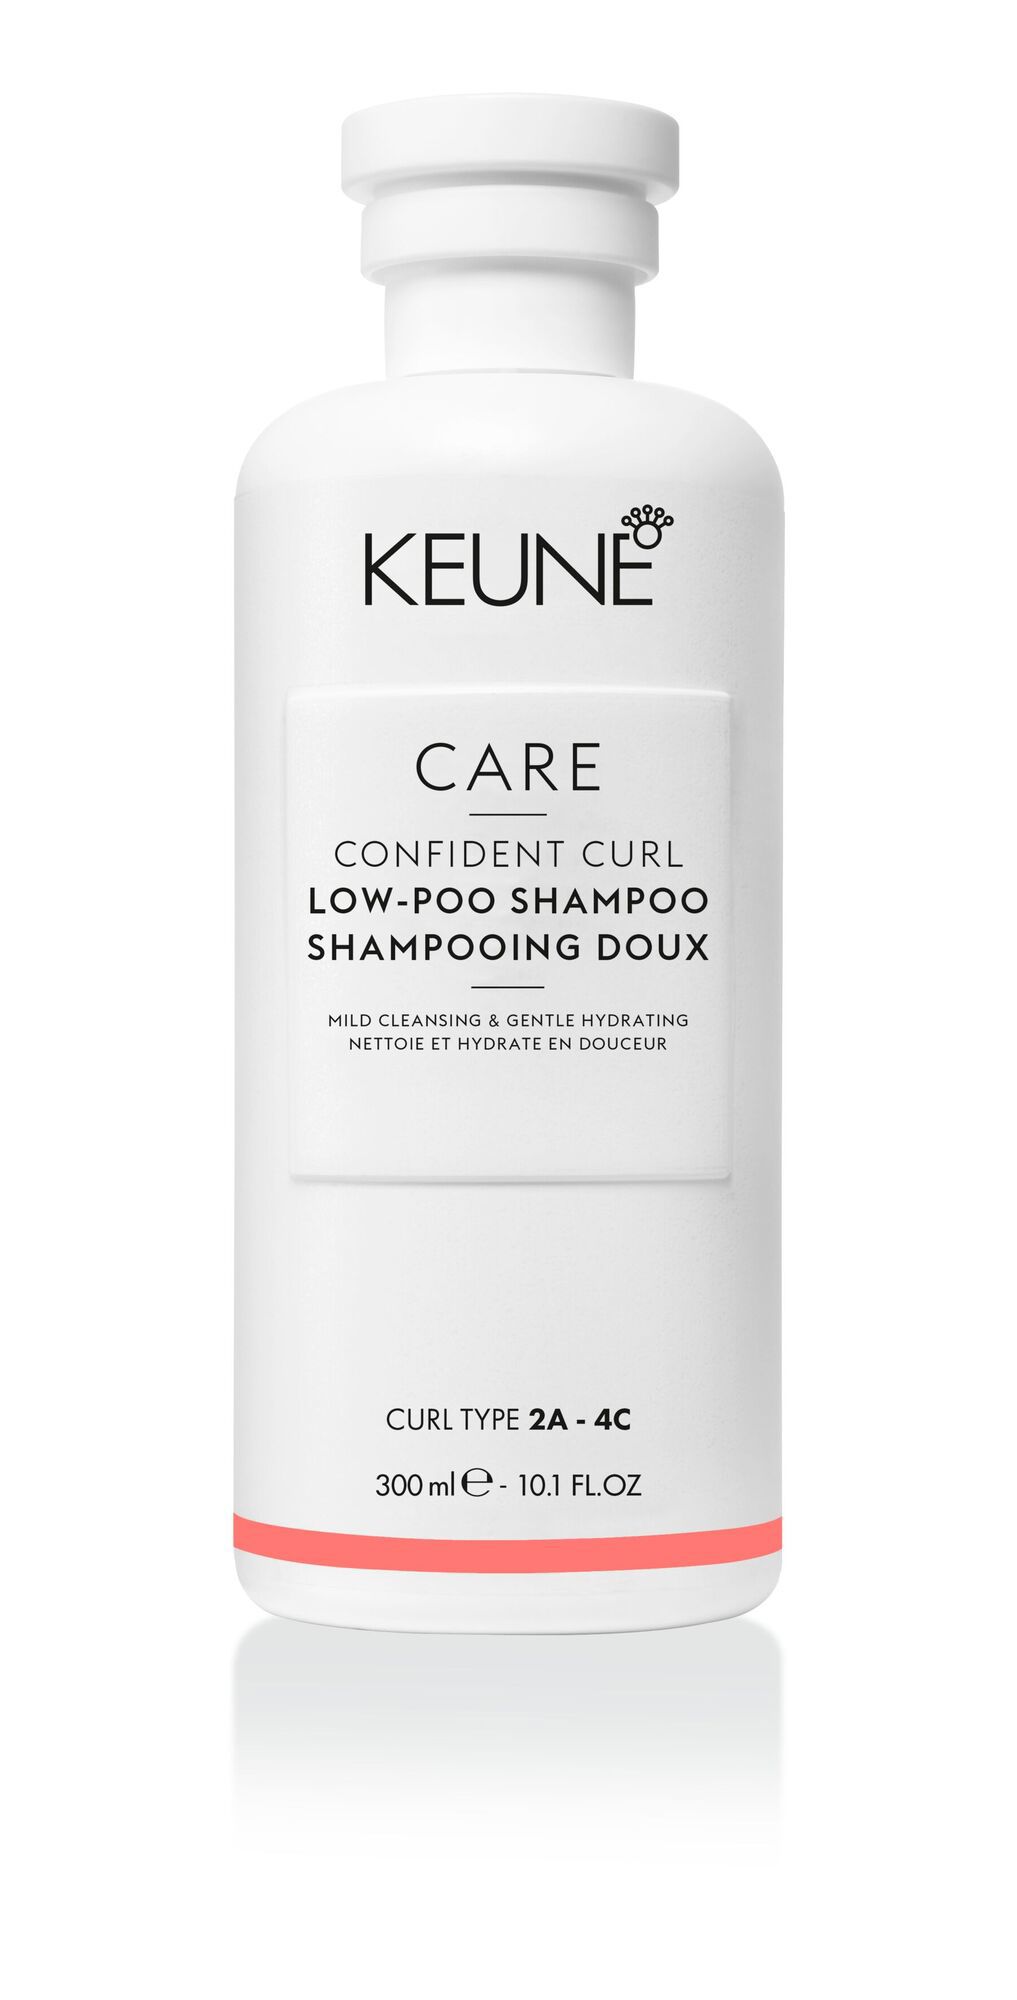 CARE Confident Curl Low-Poo Shampoo